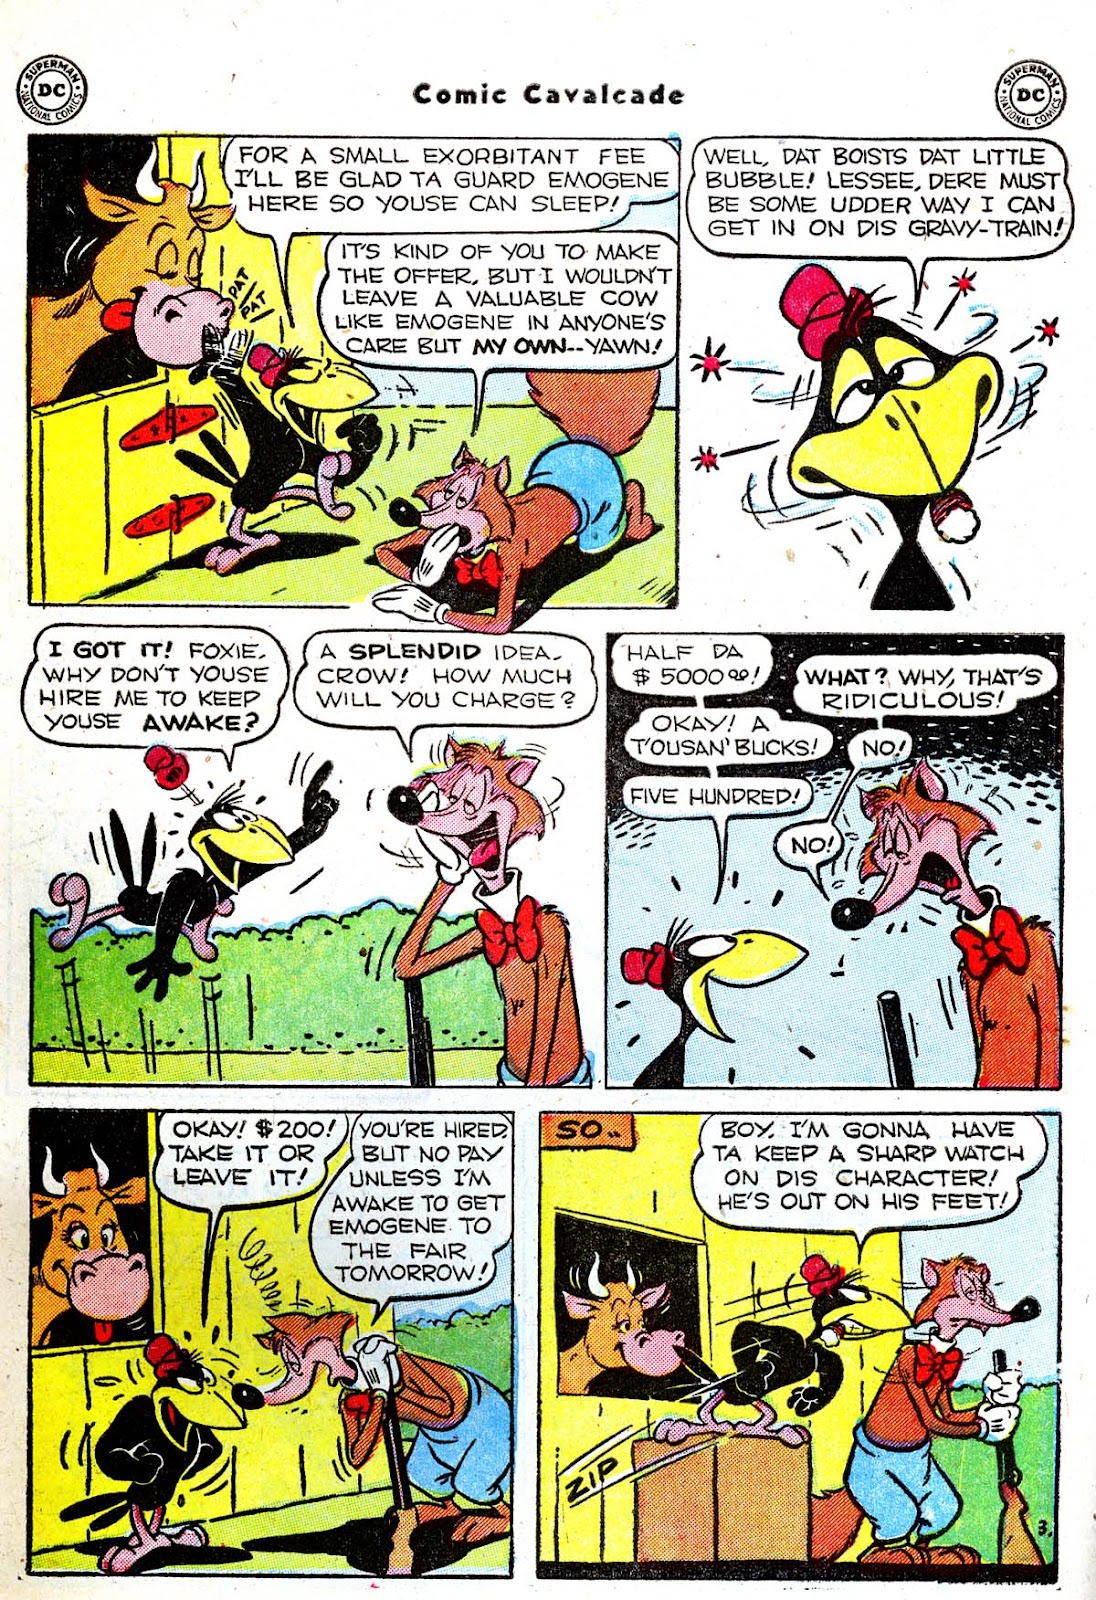 Comic Cavalcade issue 48 - Page 5